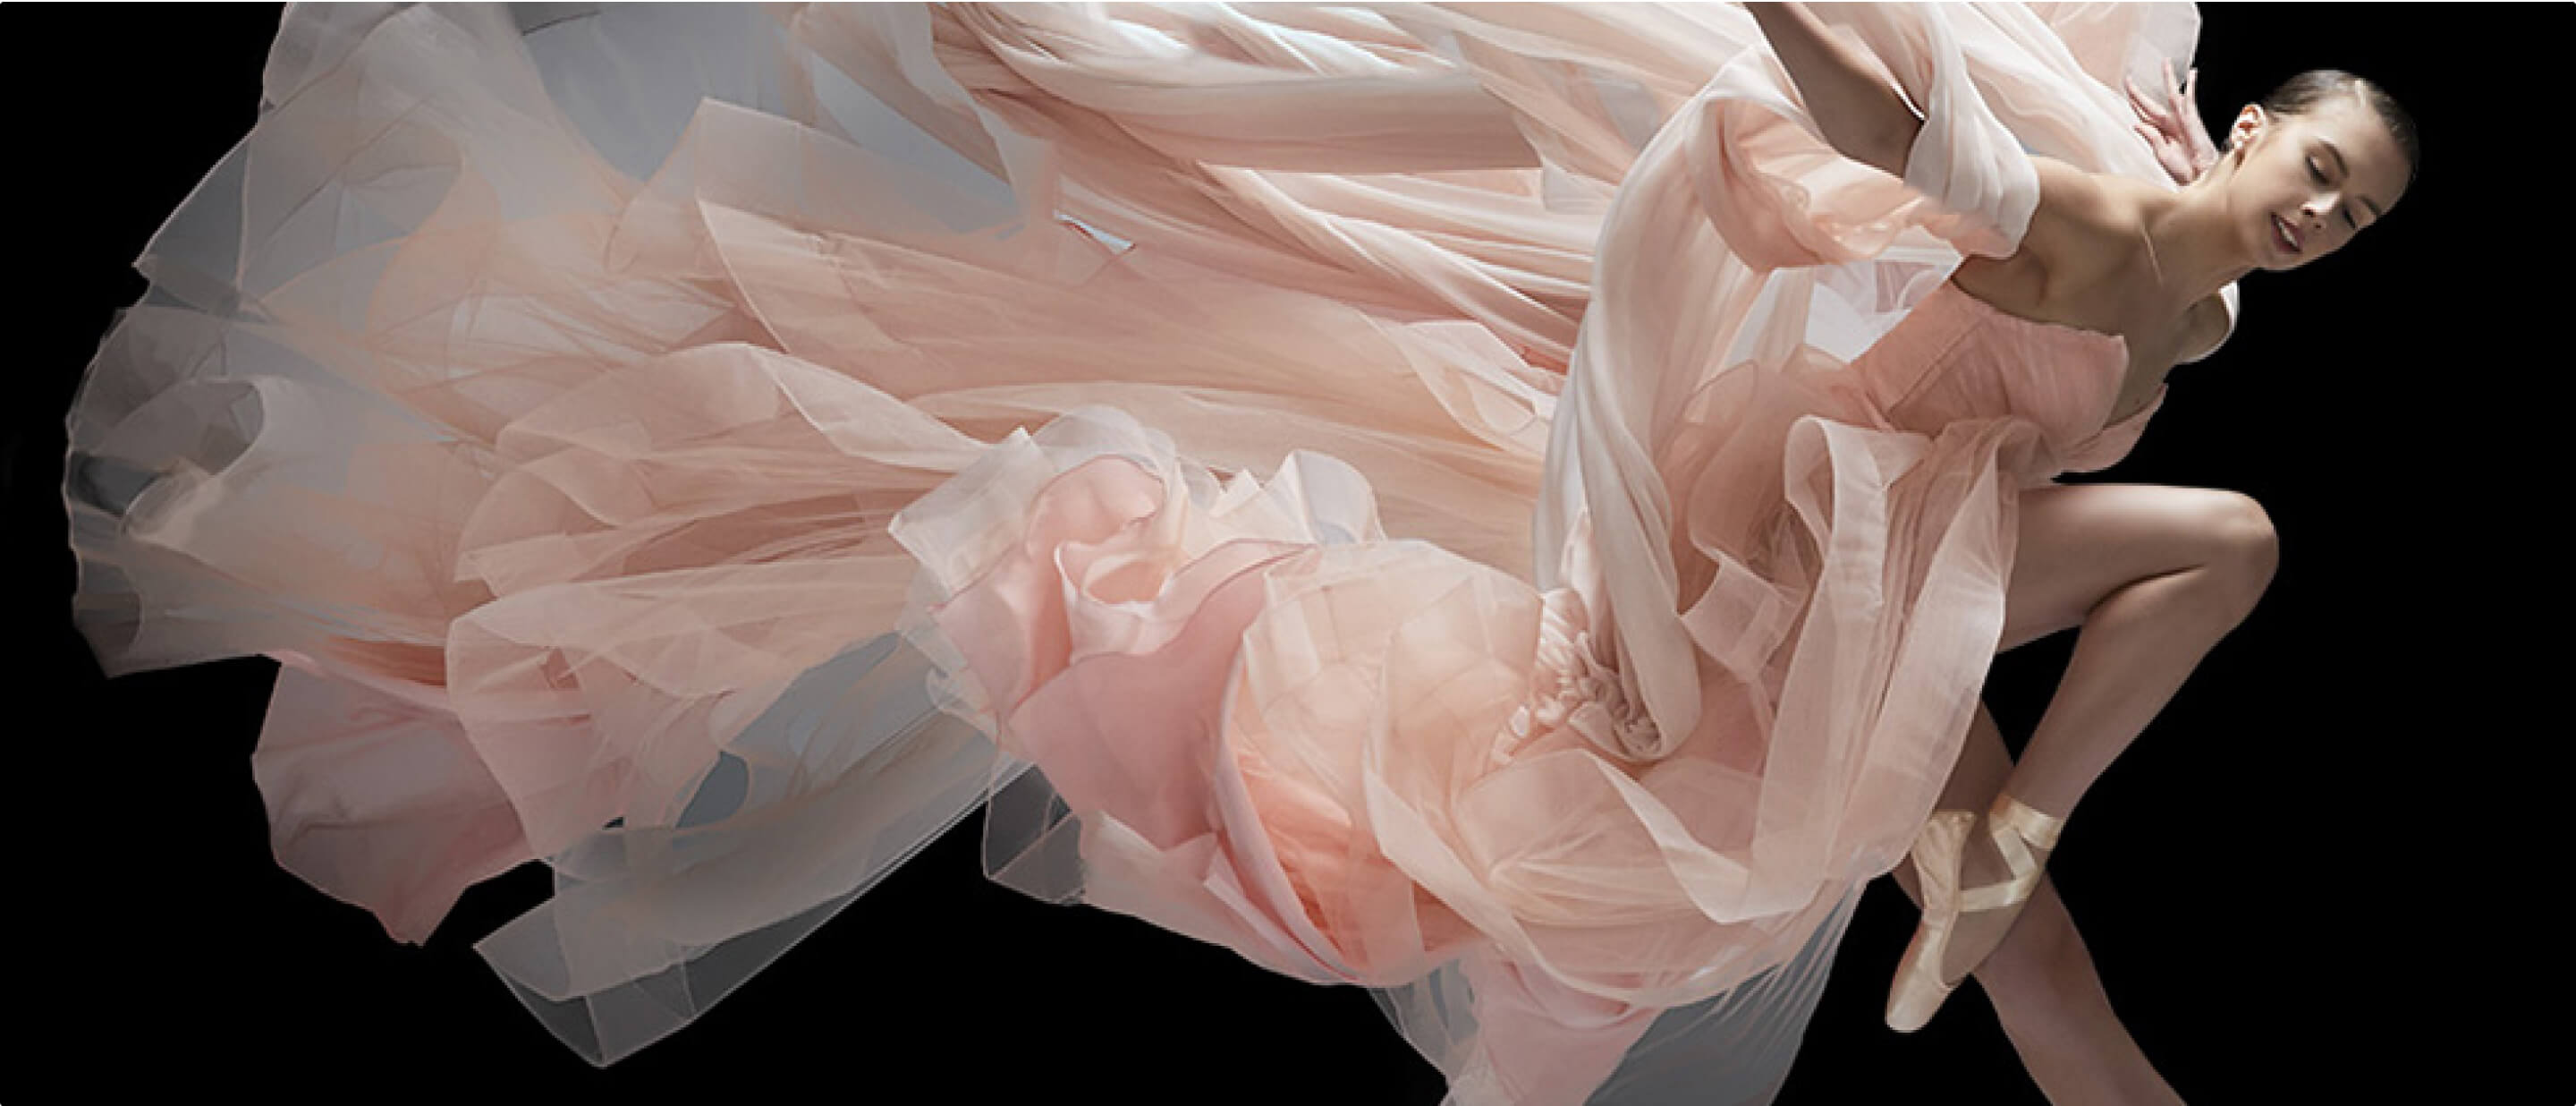 Chiara dancing in a flowing pink gown